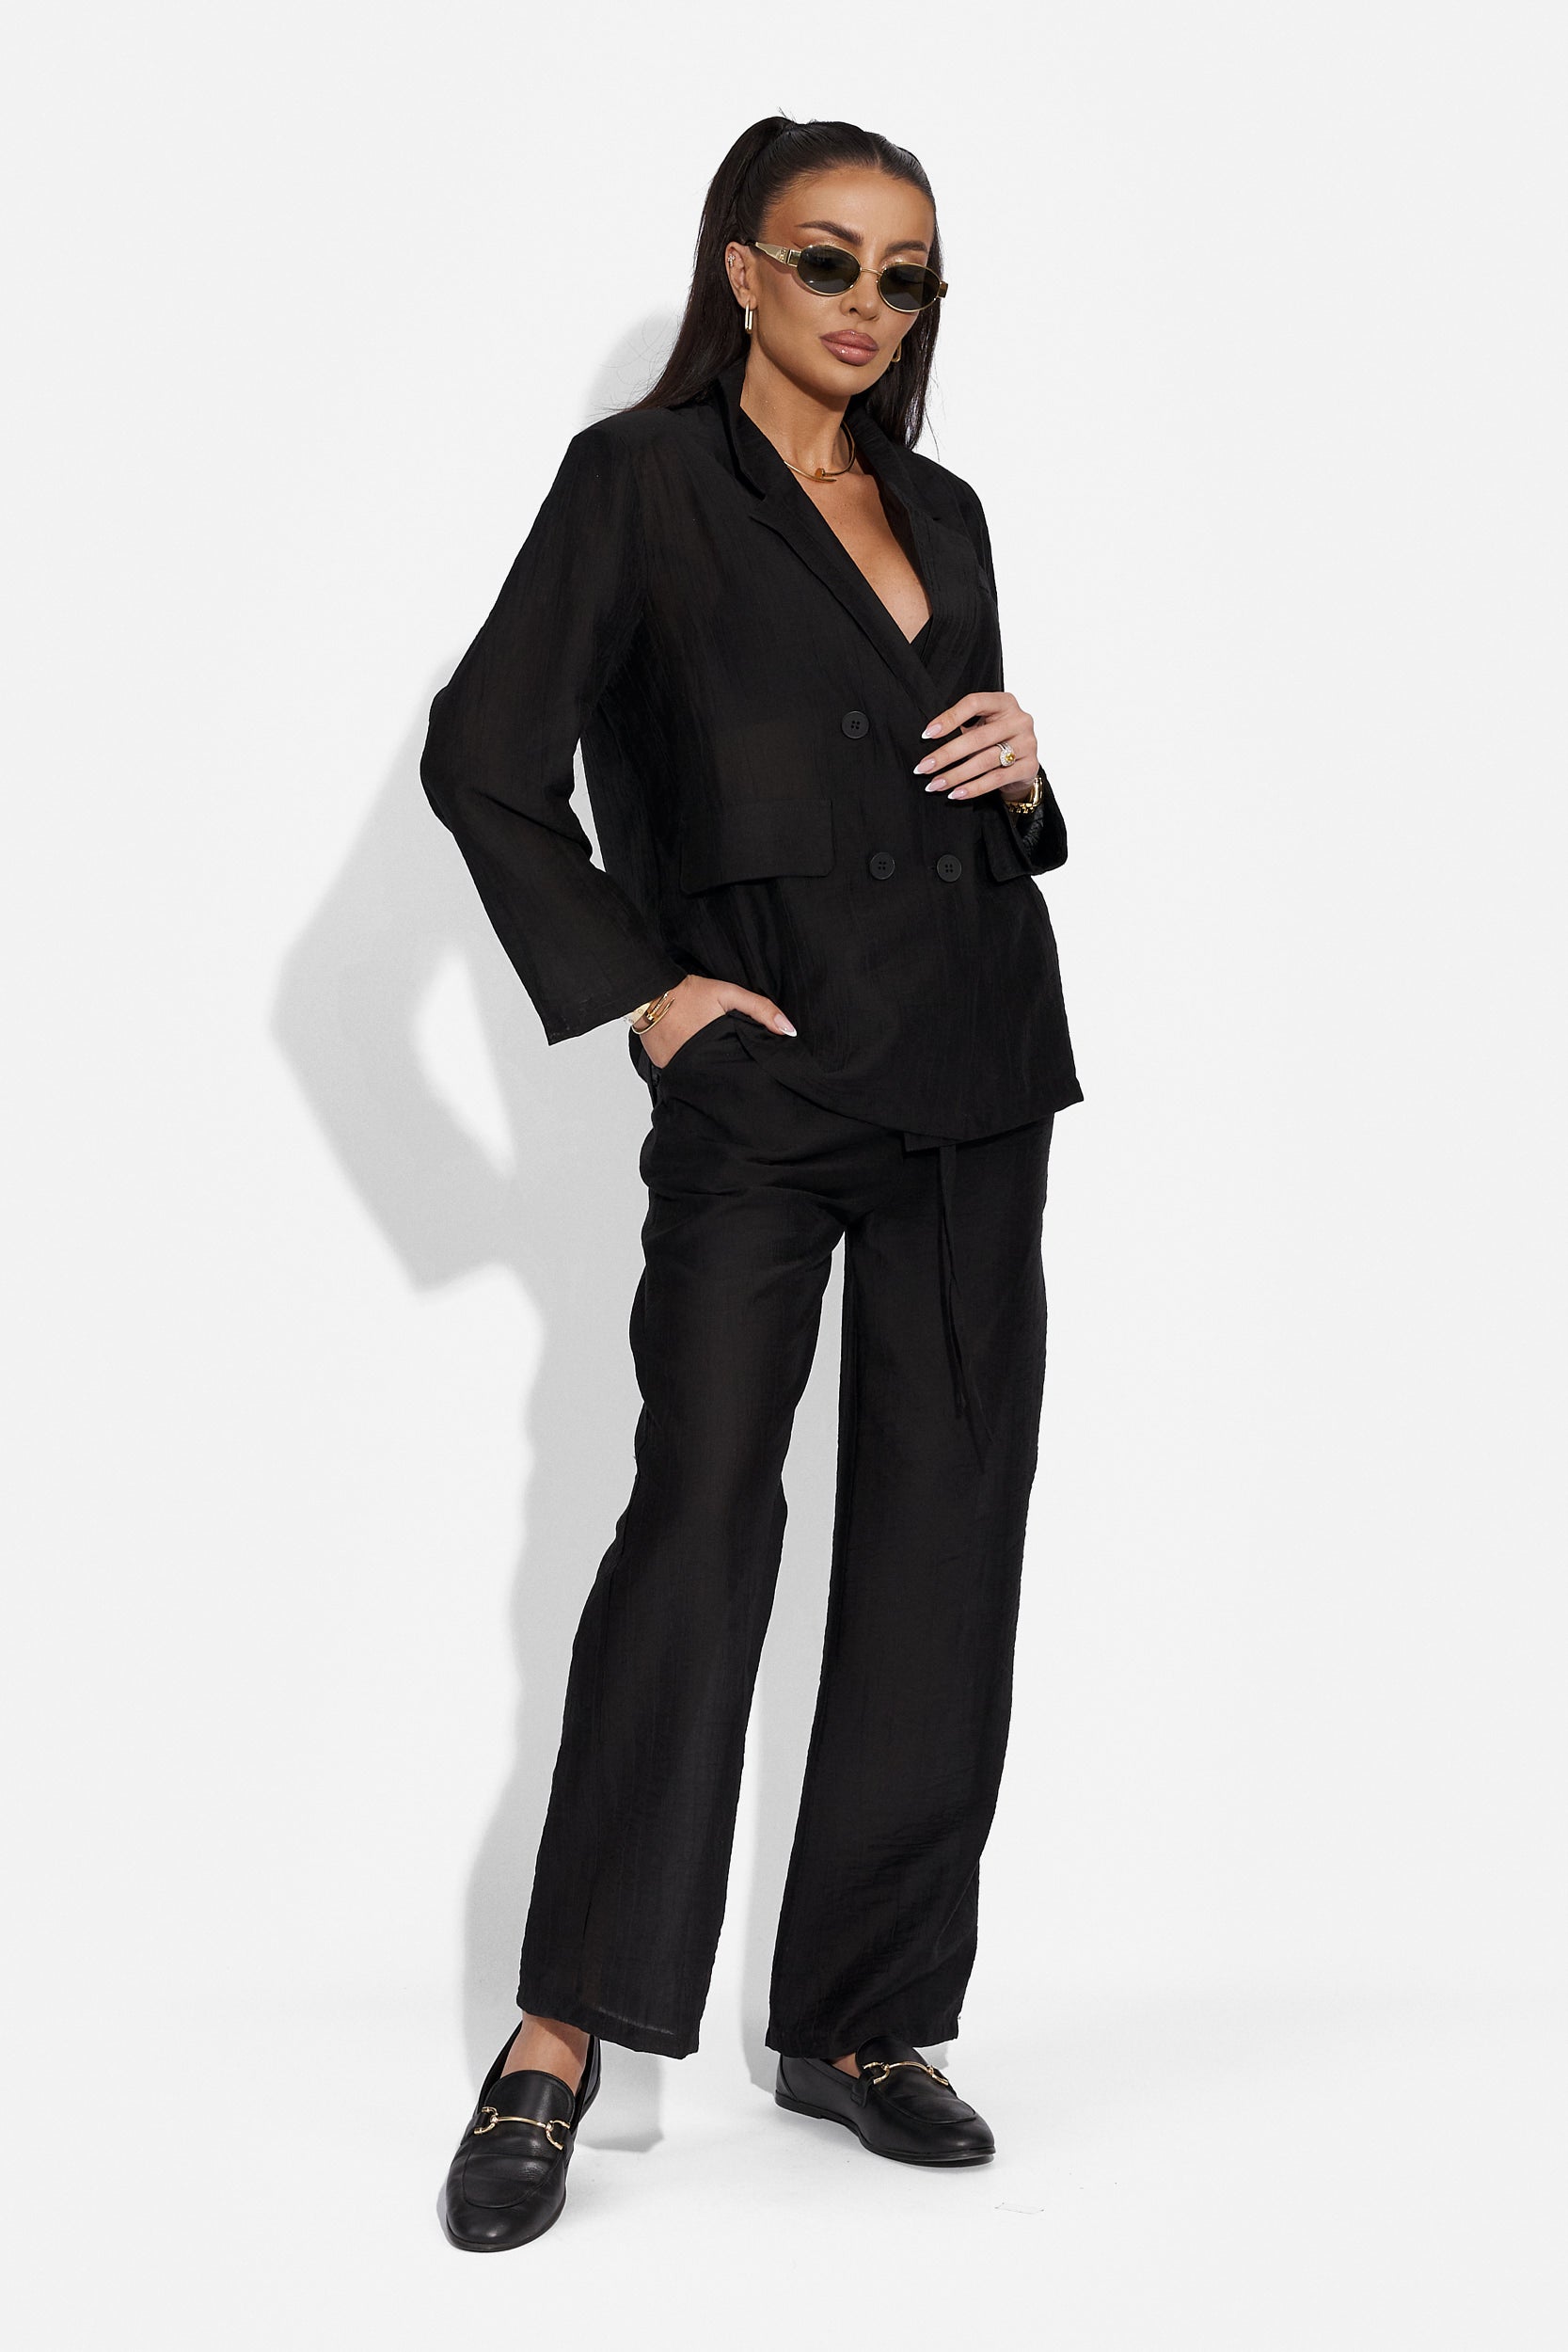 Ladies' elegant black pants suit Salesa Bogas